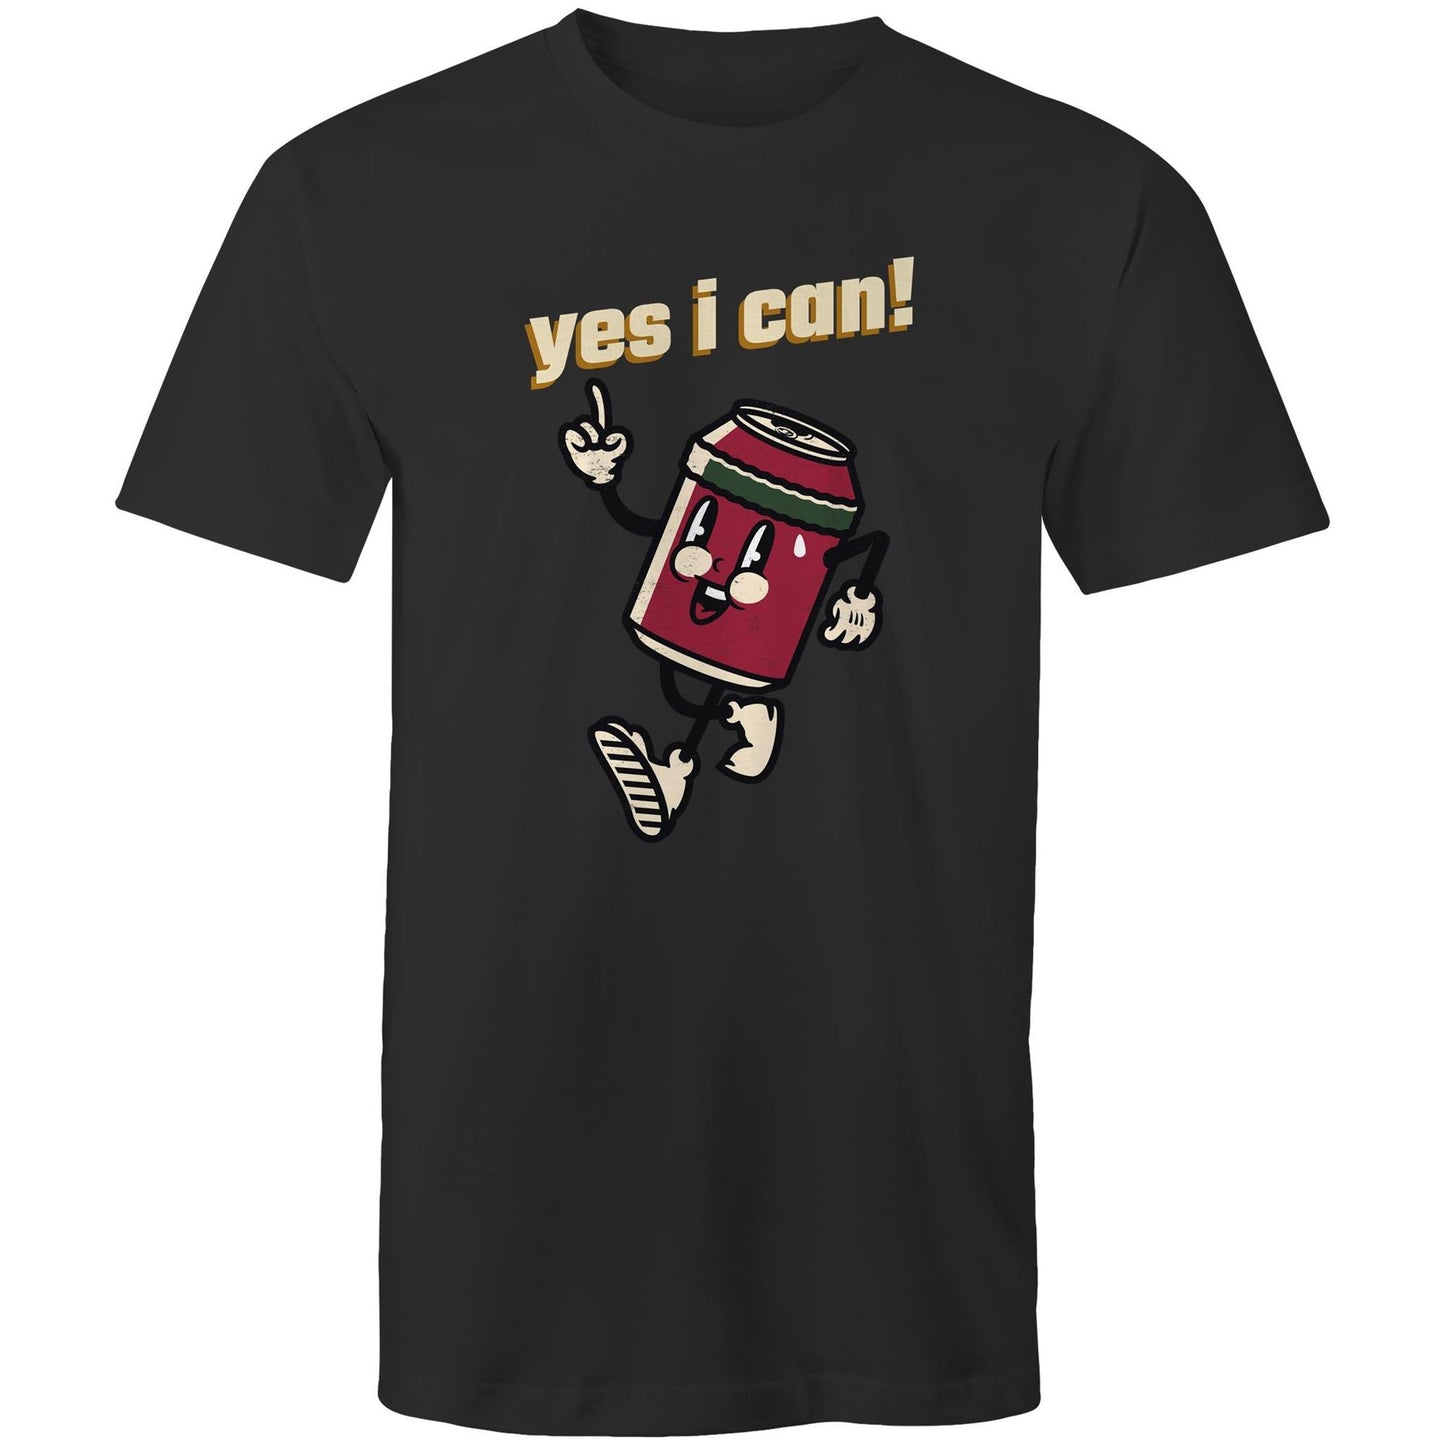 Yes I Can! - Mens T-Shirt Black Mens T-shirt Motivation Retro